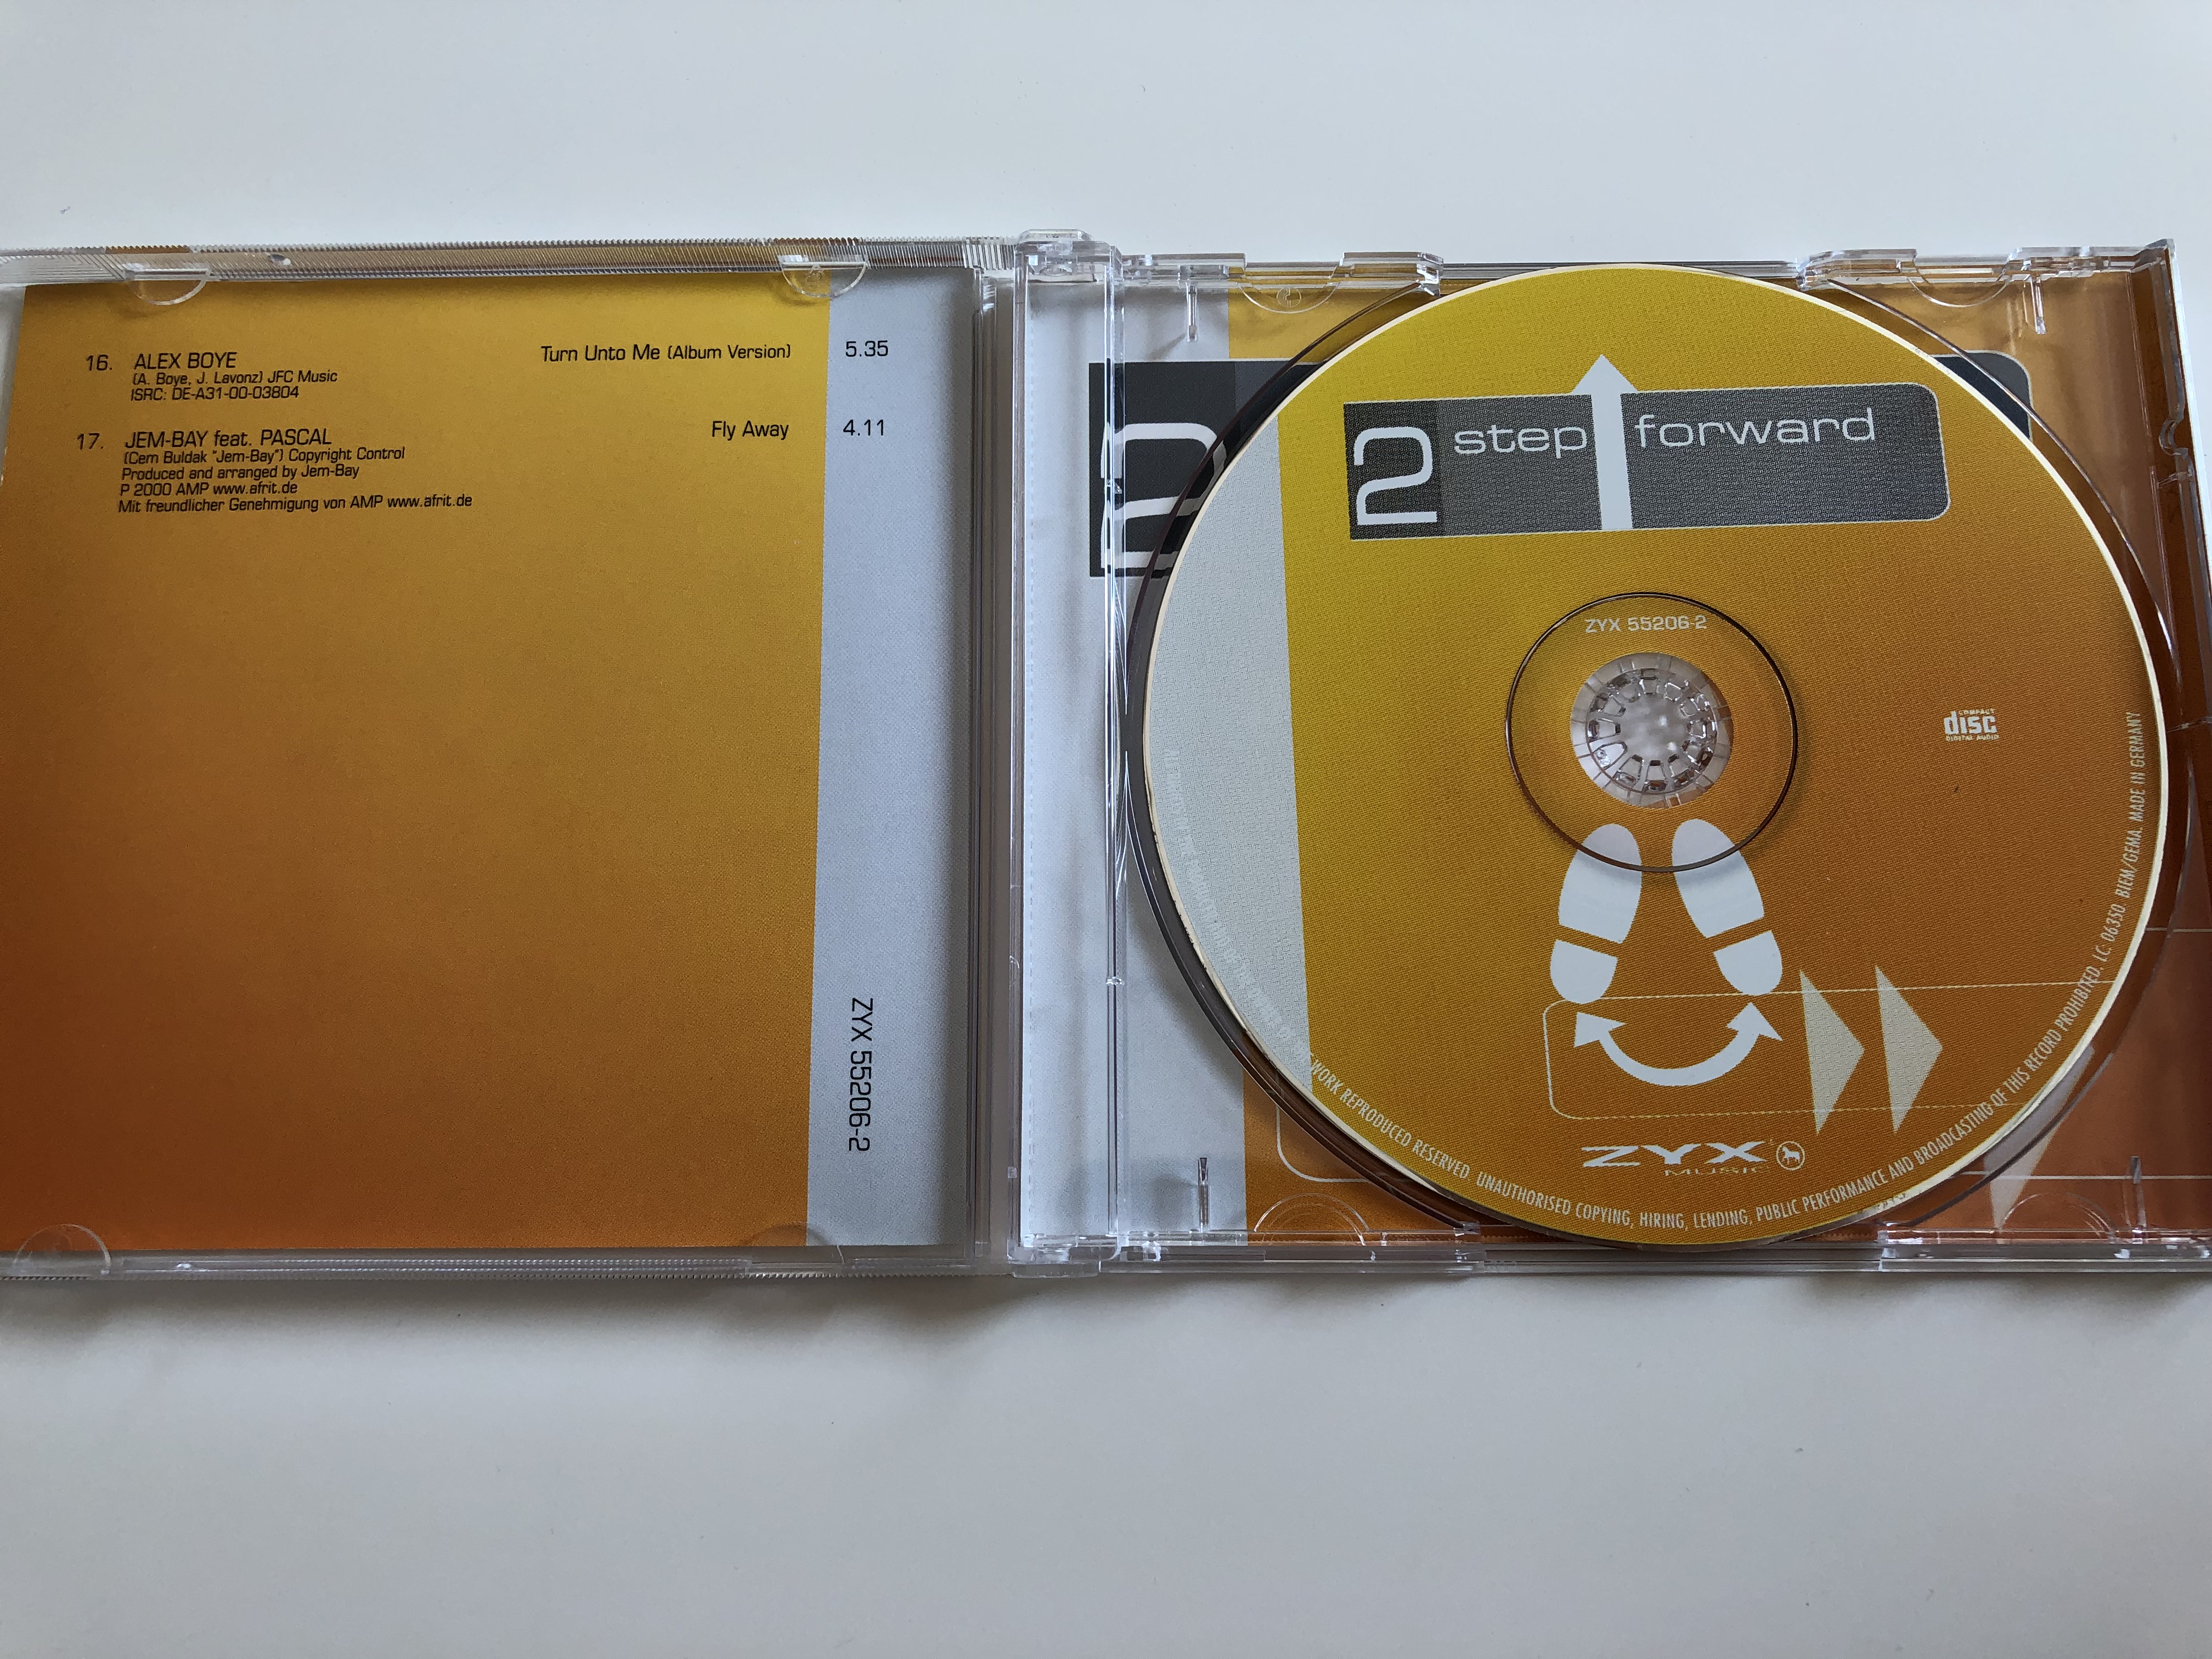 2-step-forward-featuring-amber-homegrown-dj-luck-mc-neat-feat.-jj-xiomara-toots...-and-more-zyx-music-audio-cd-2000-zyx-55206-2-2-.jpg